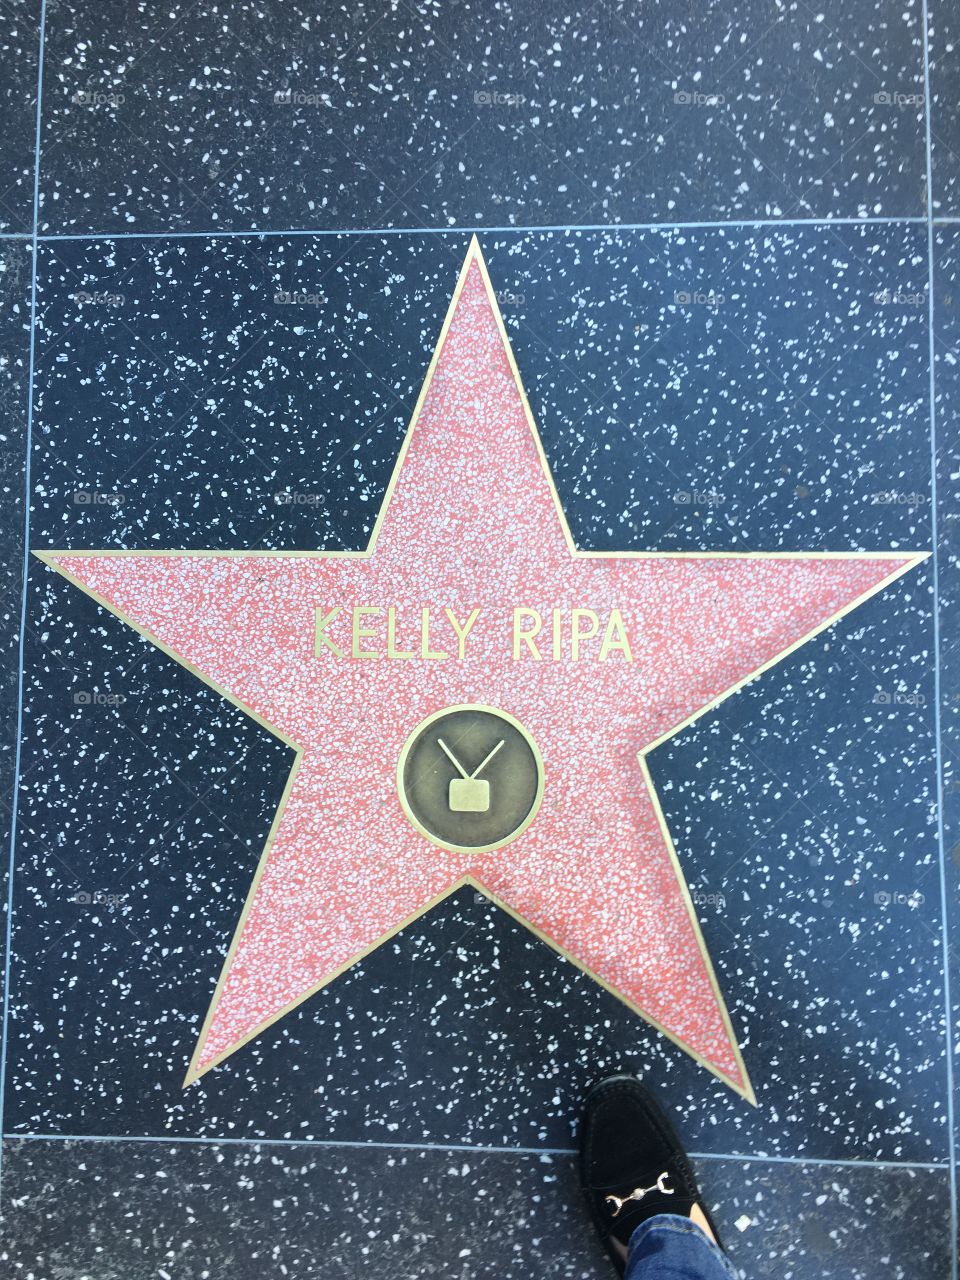 Hollywood star kelly rips
